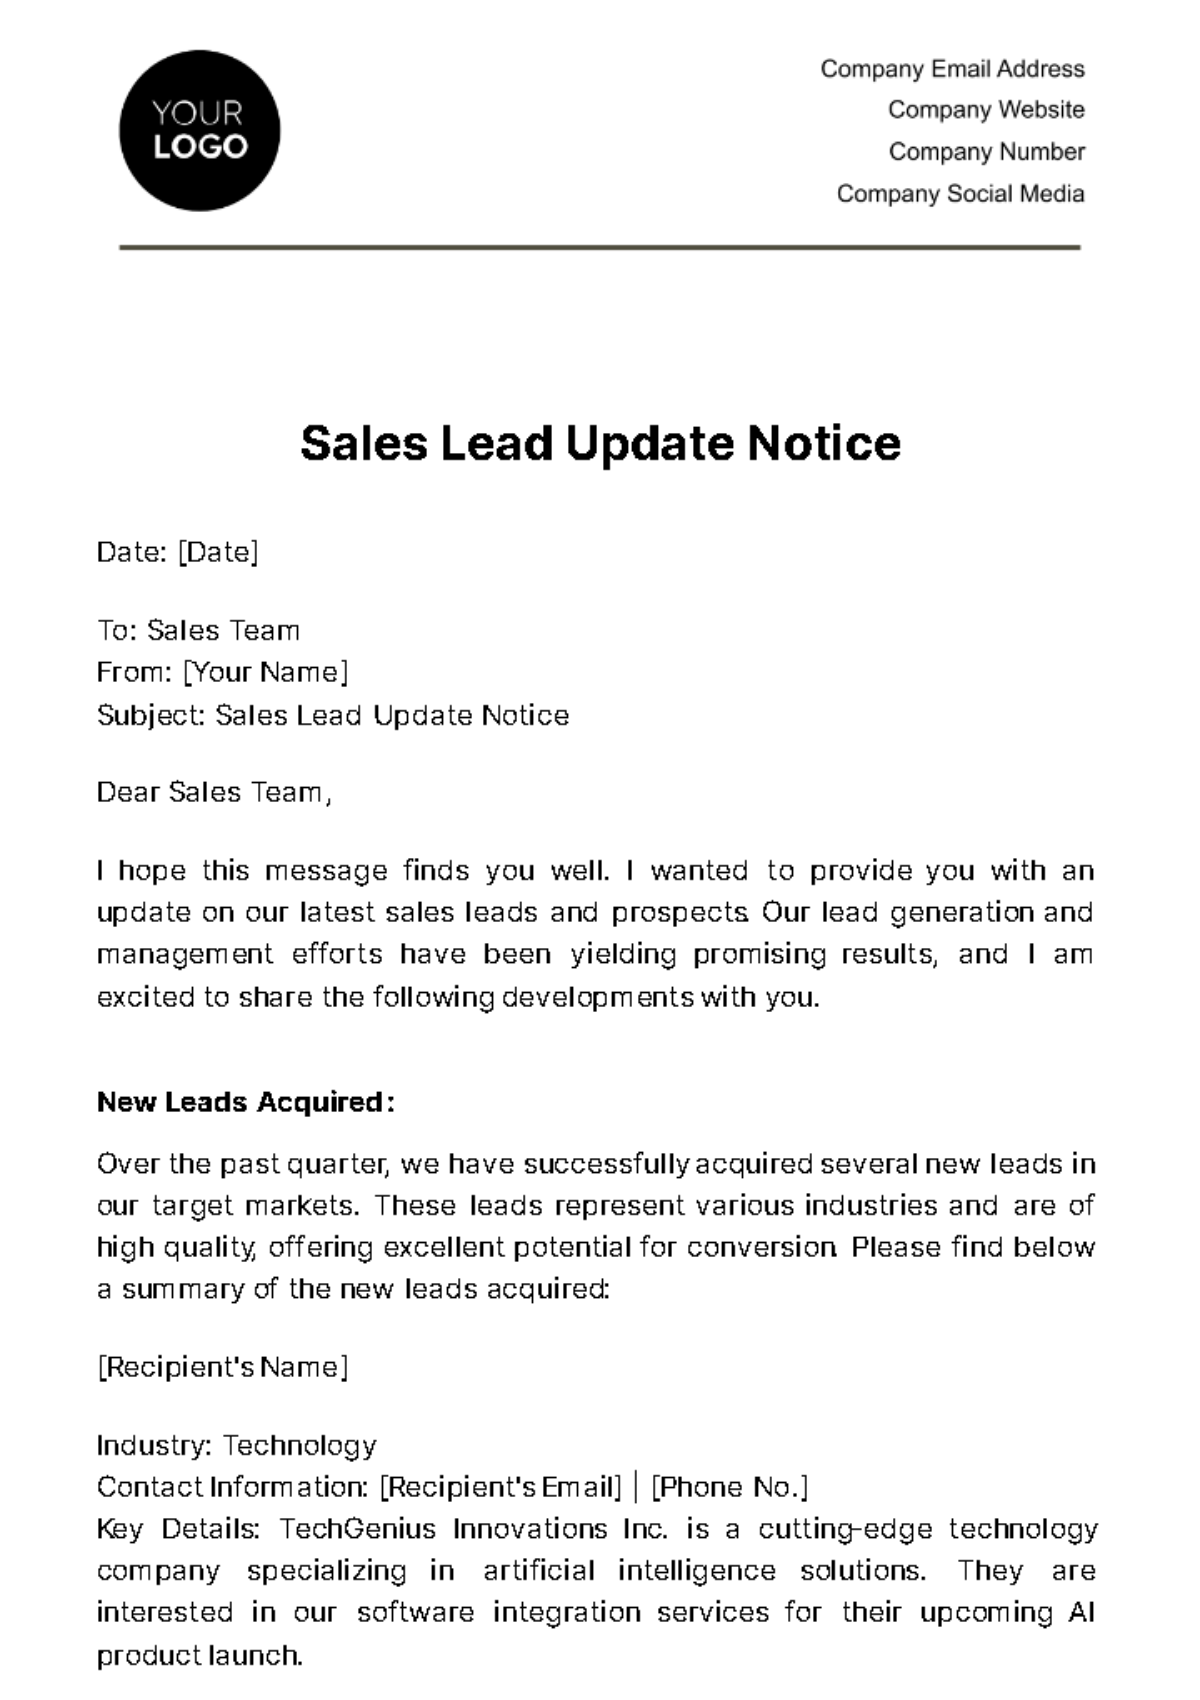 Free Sales Lead Update Notice Template